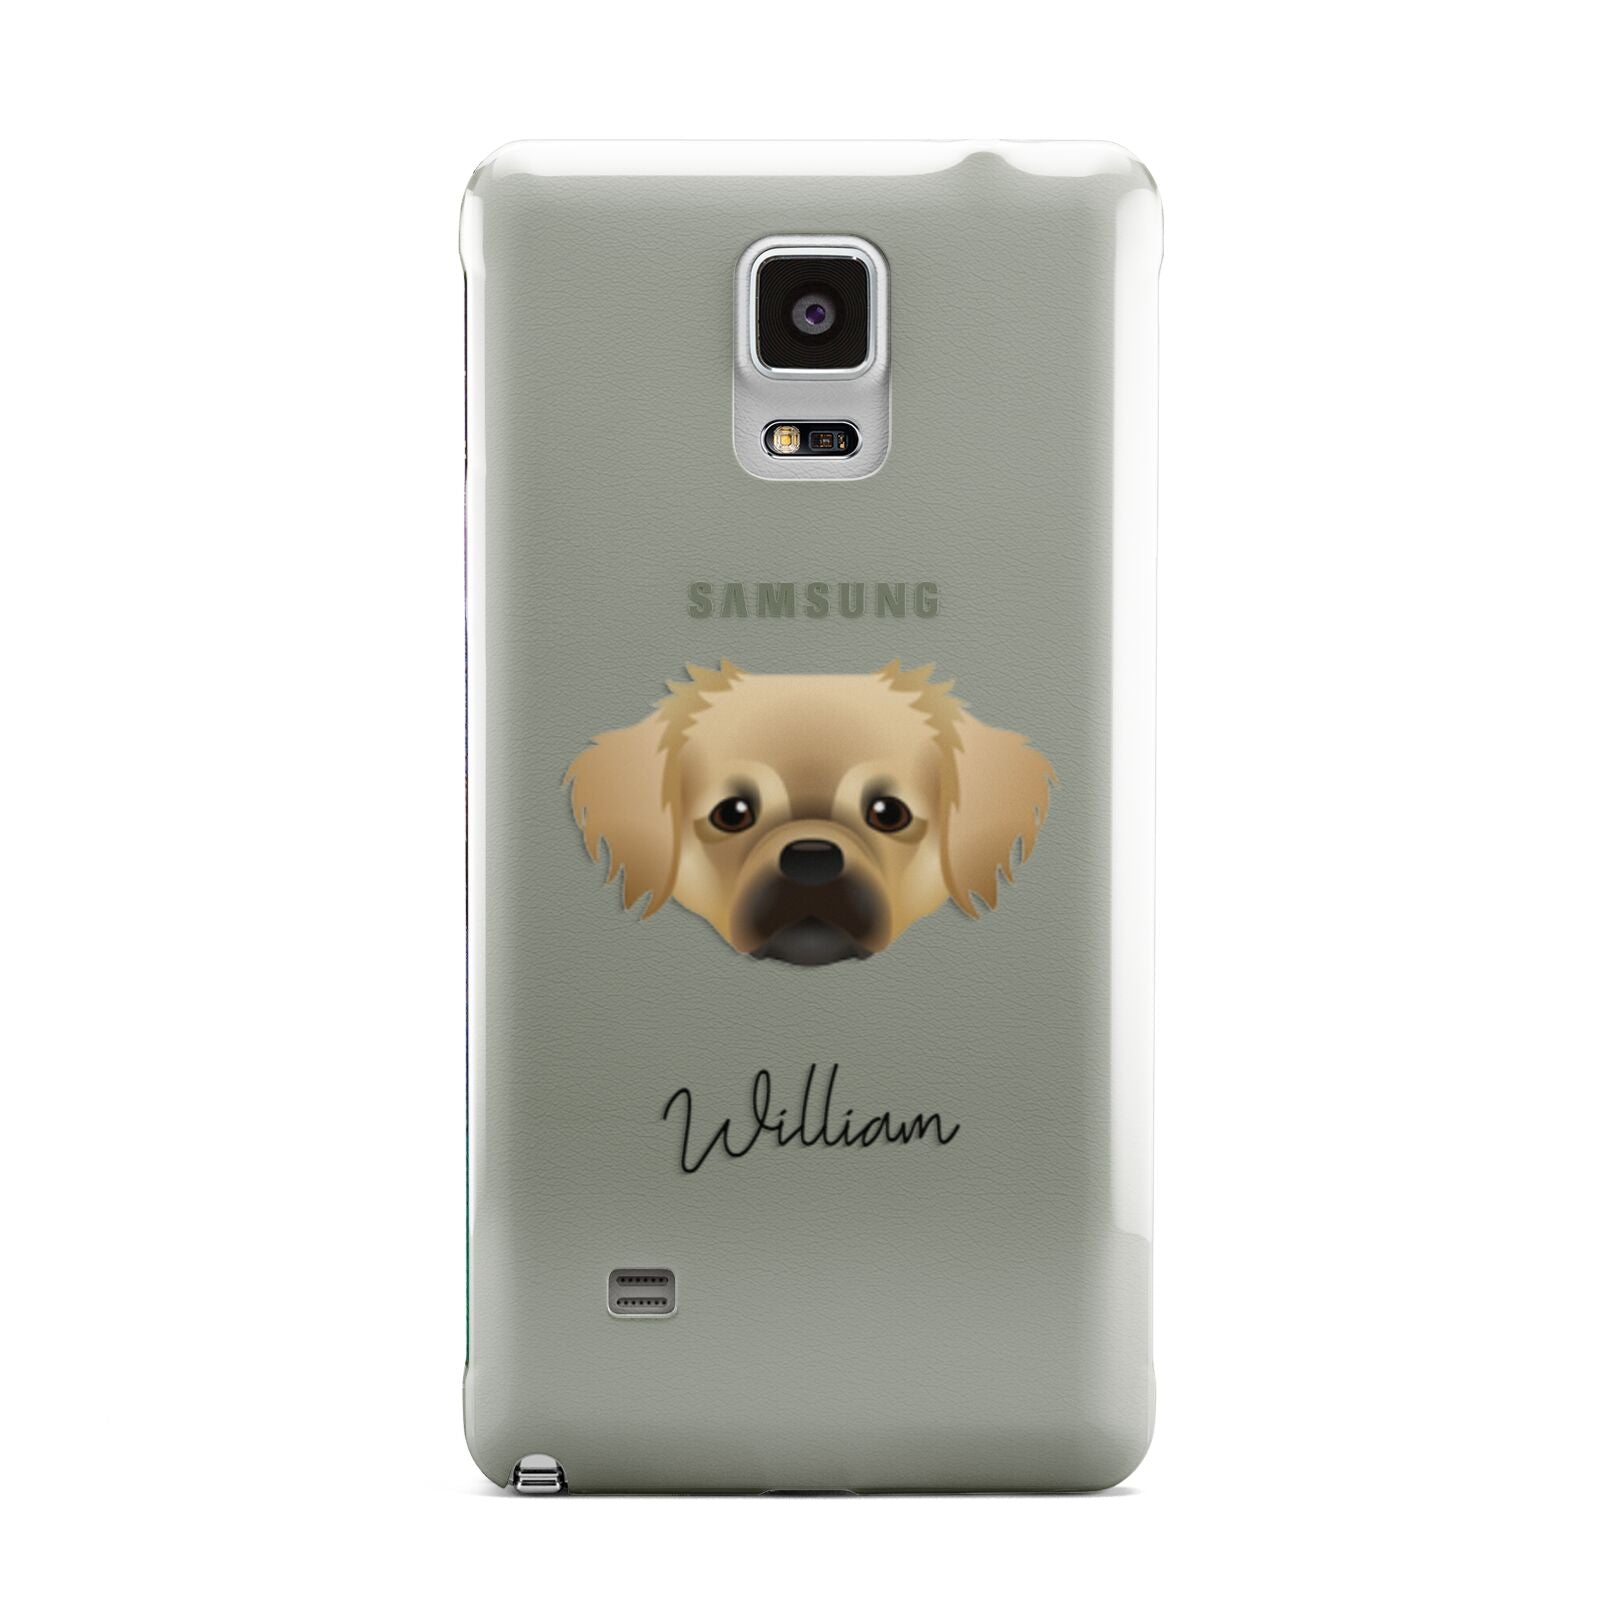 Tibetan Spaniel Personalised Samsung Galaxy Note 4 Case